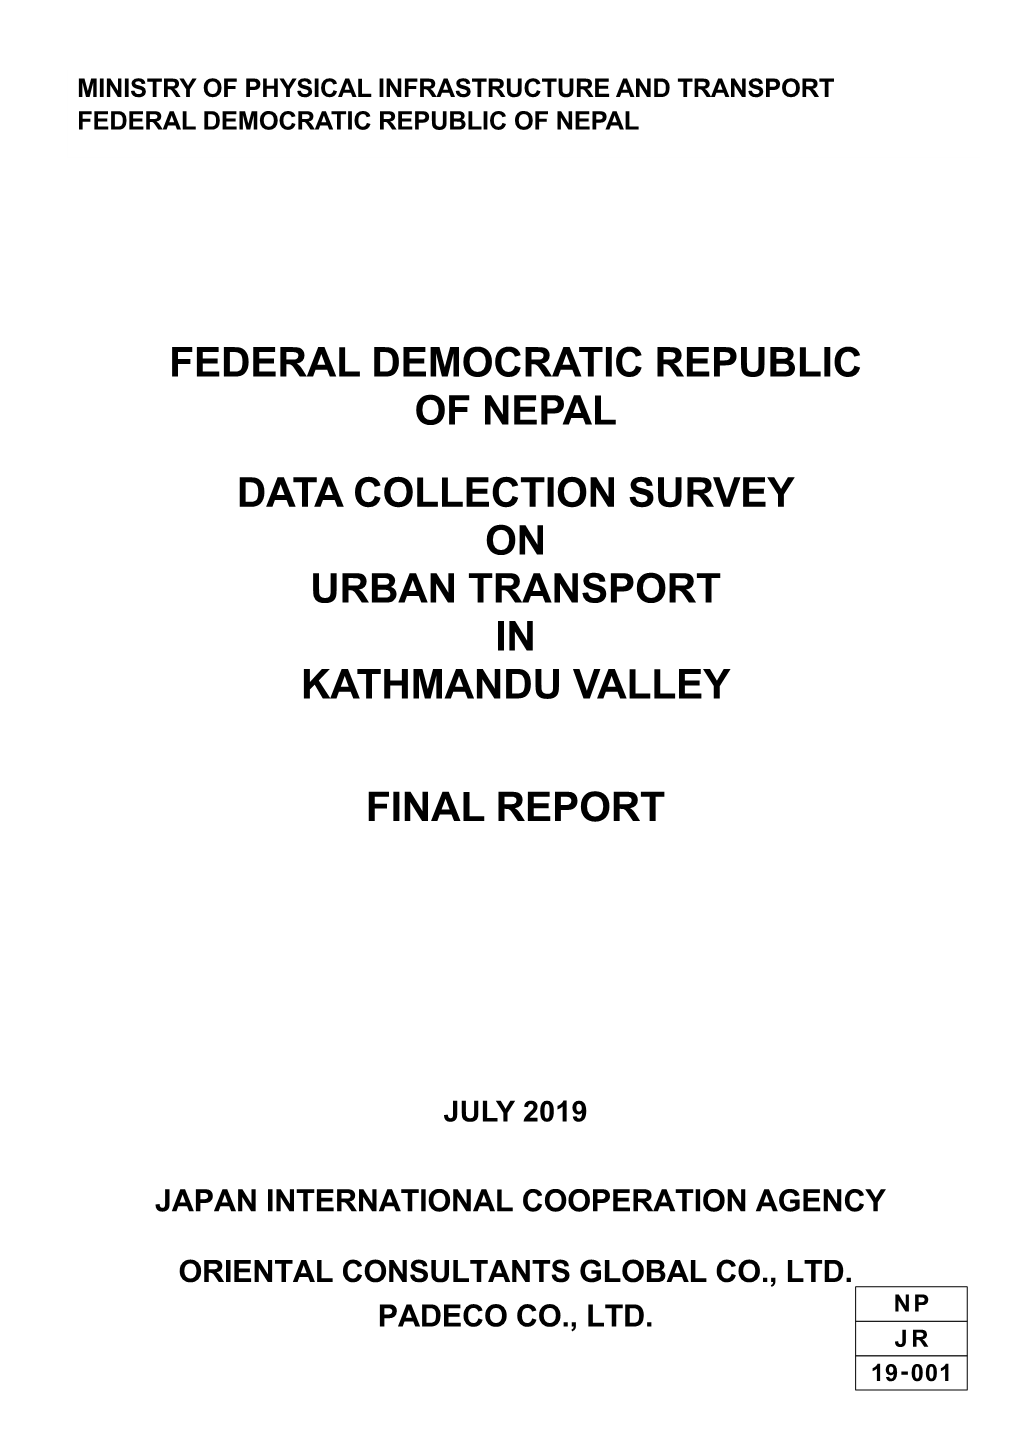 Federal Democratic Republic of Nepal Data Collection Survey on Urban Transport in Kathmandu Valley